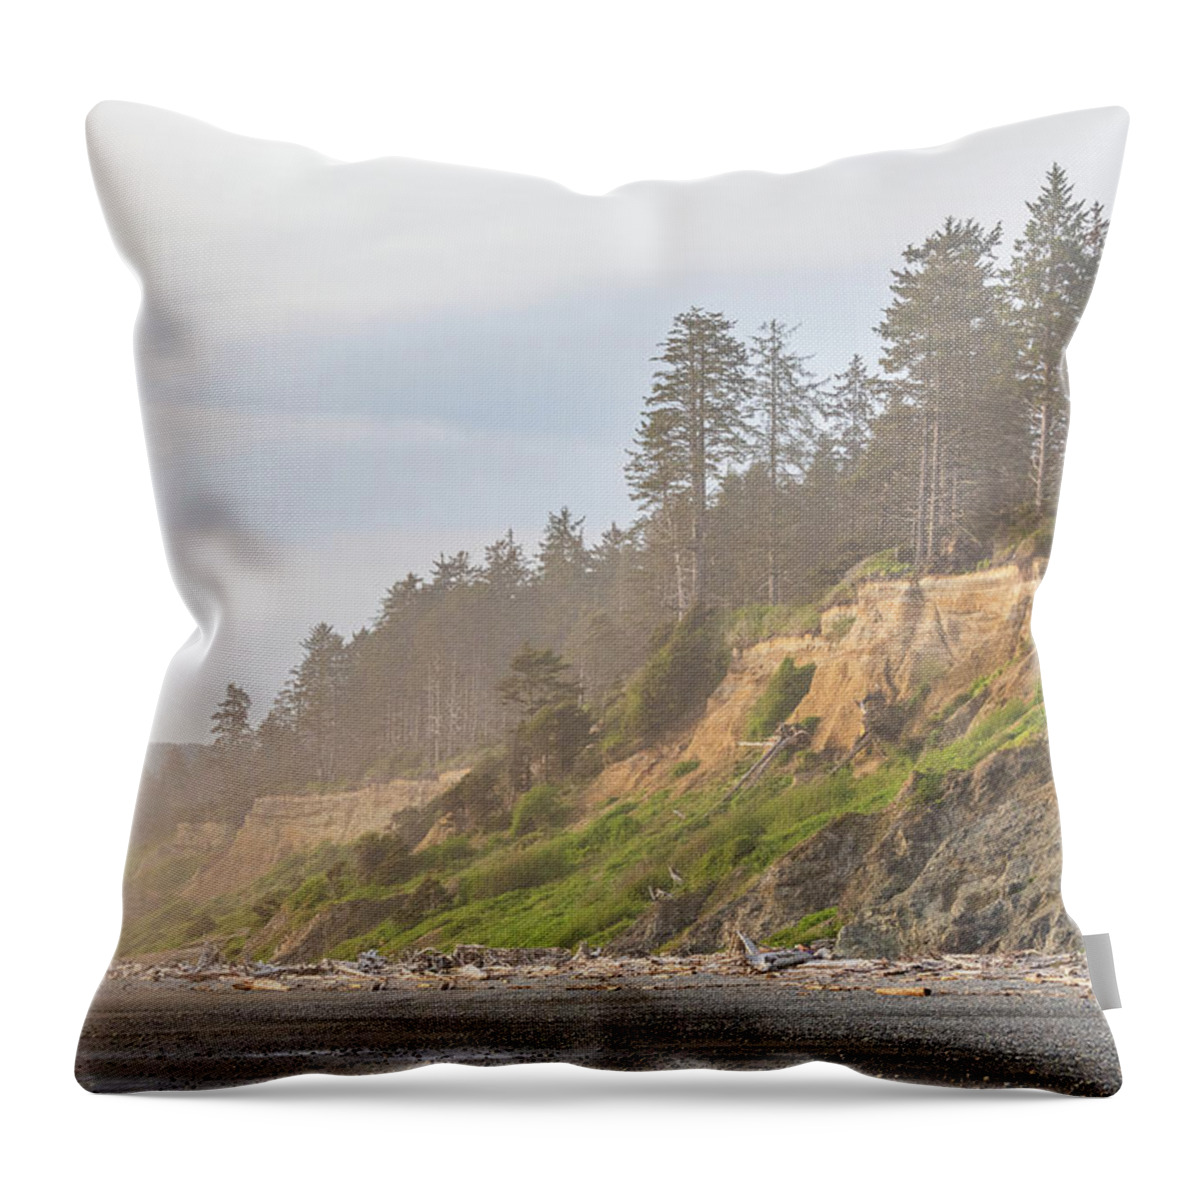 Ocean Throw Pillow featuring the photograph Misty coastline by Robert Miller